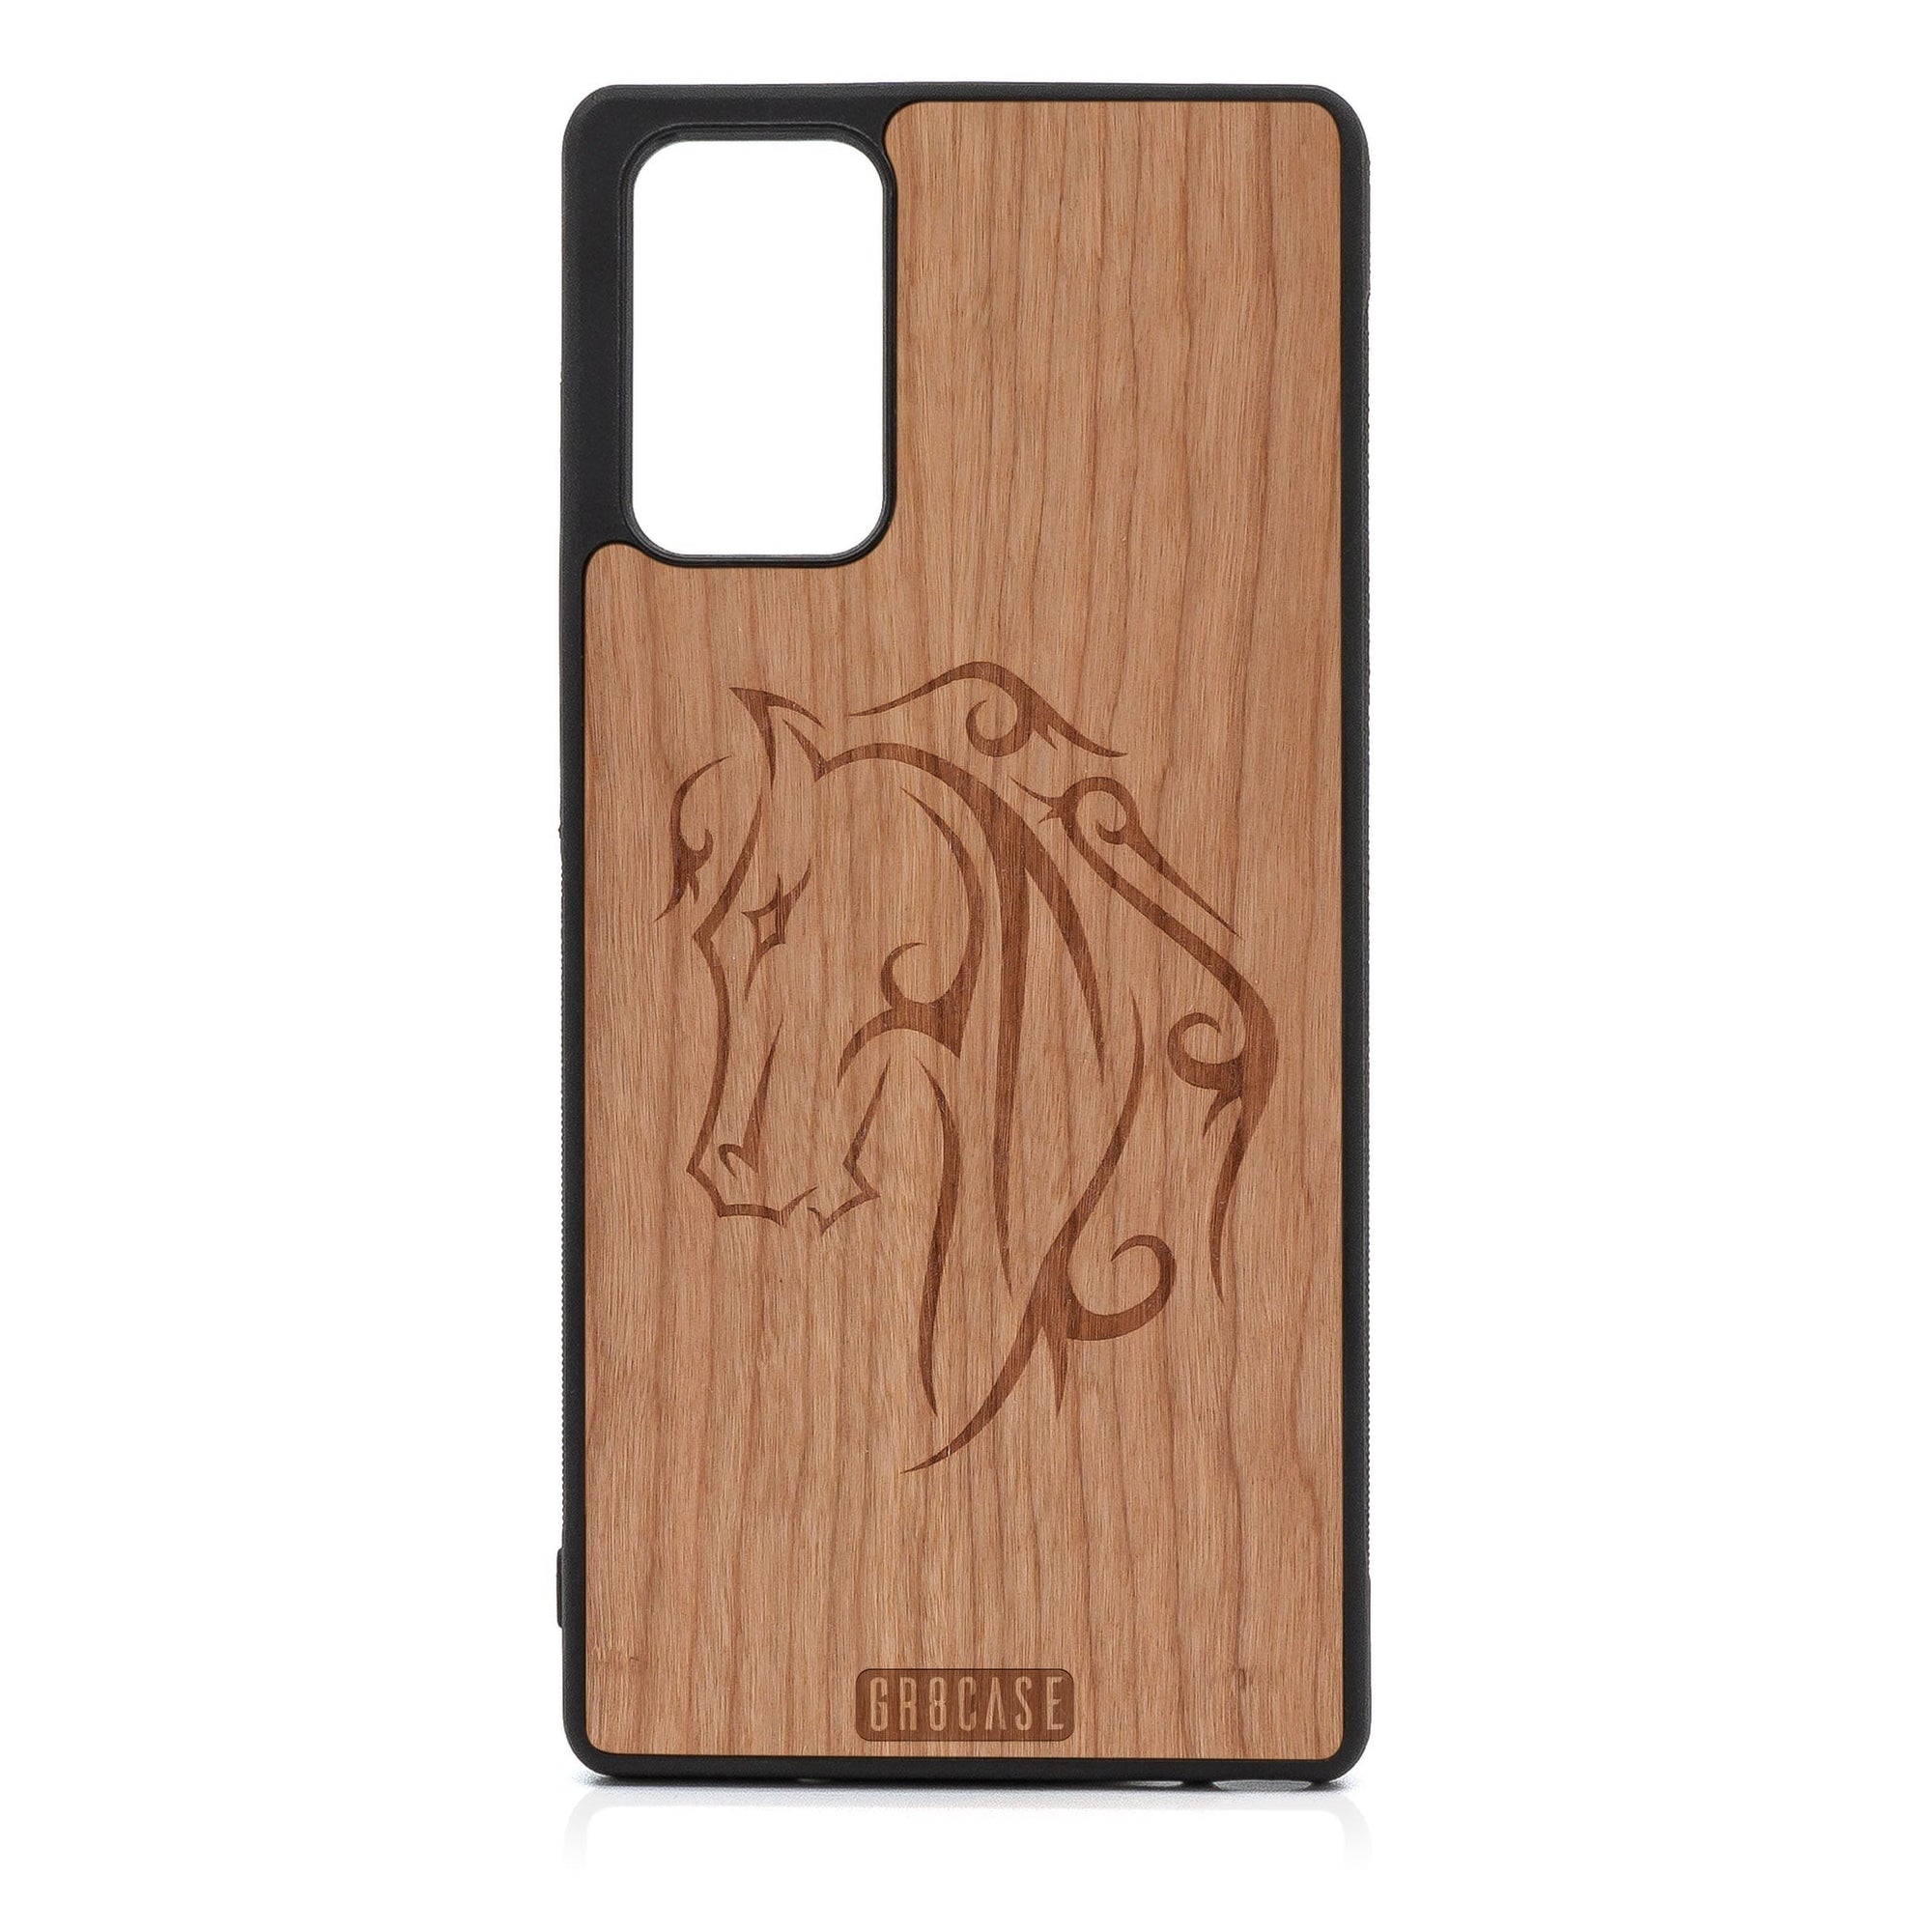 Horse Tattoo Design Wood Case For Samsung Galaxy A71 5G